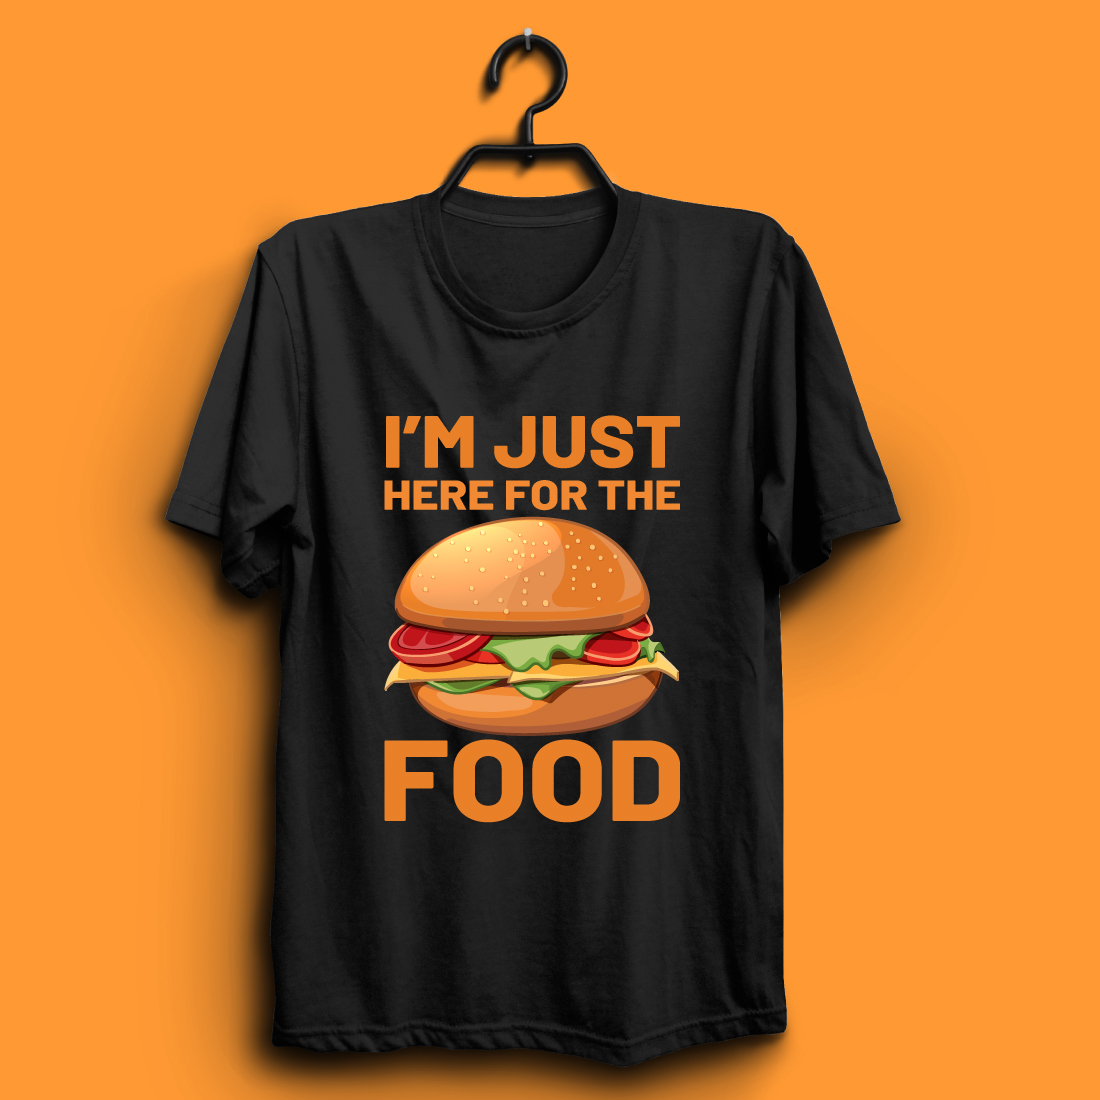 food t shirt design05 180